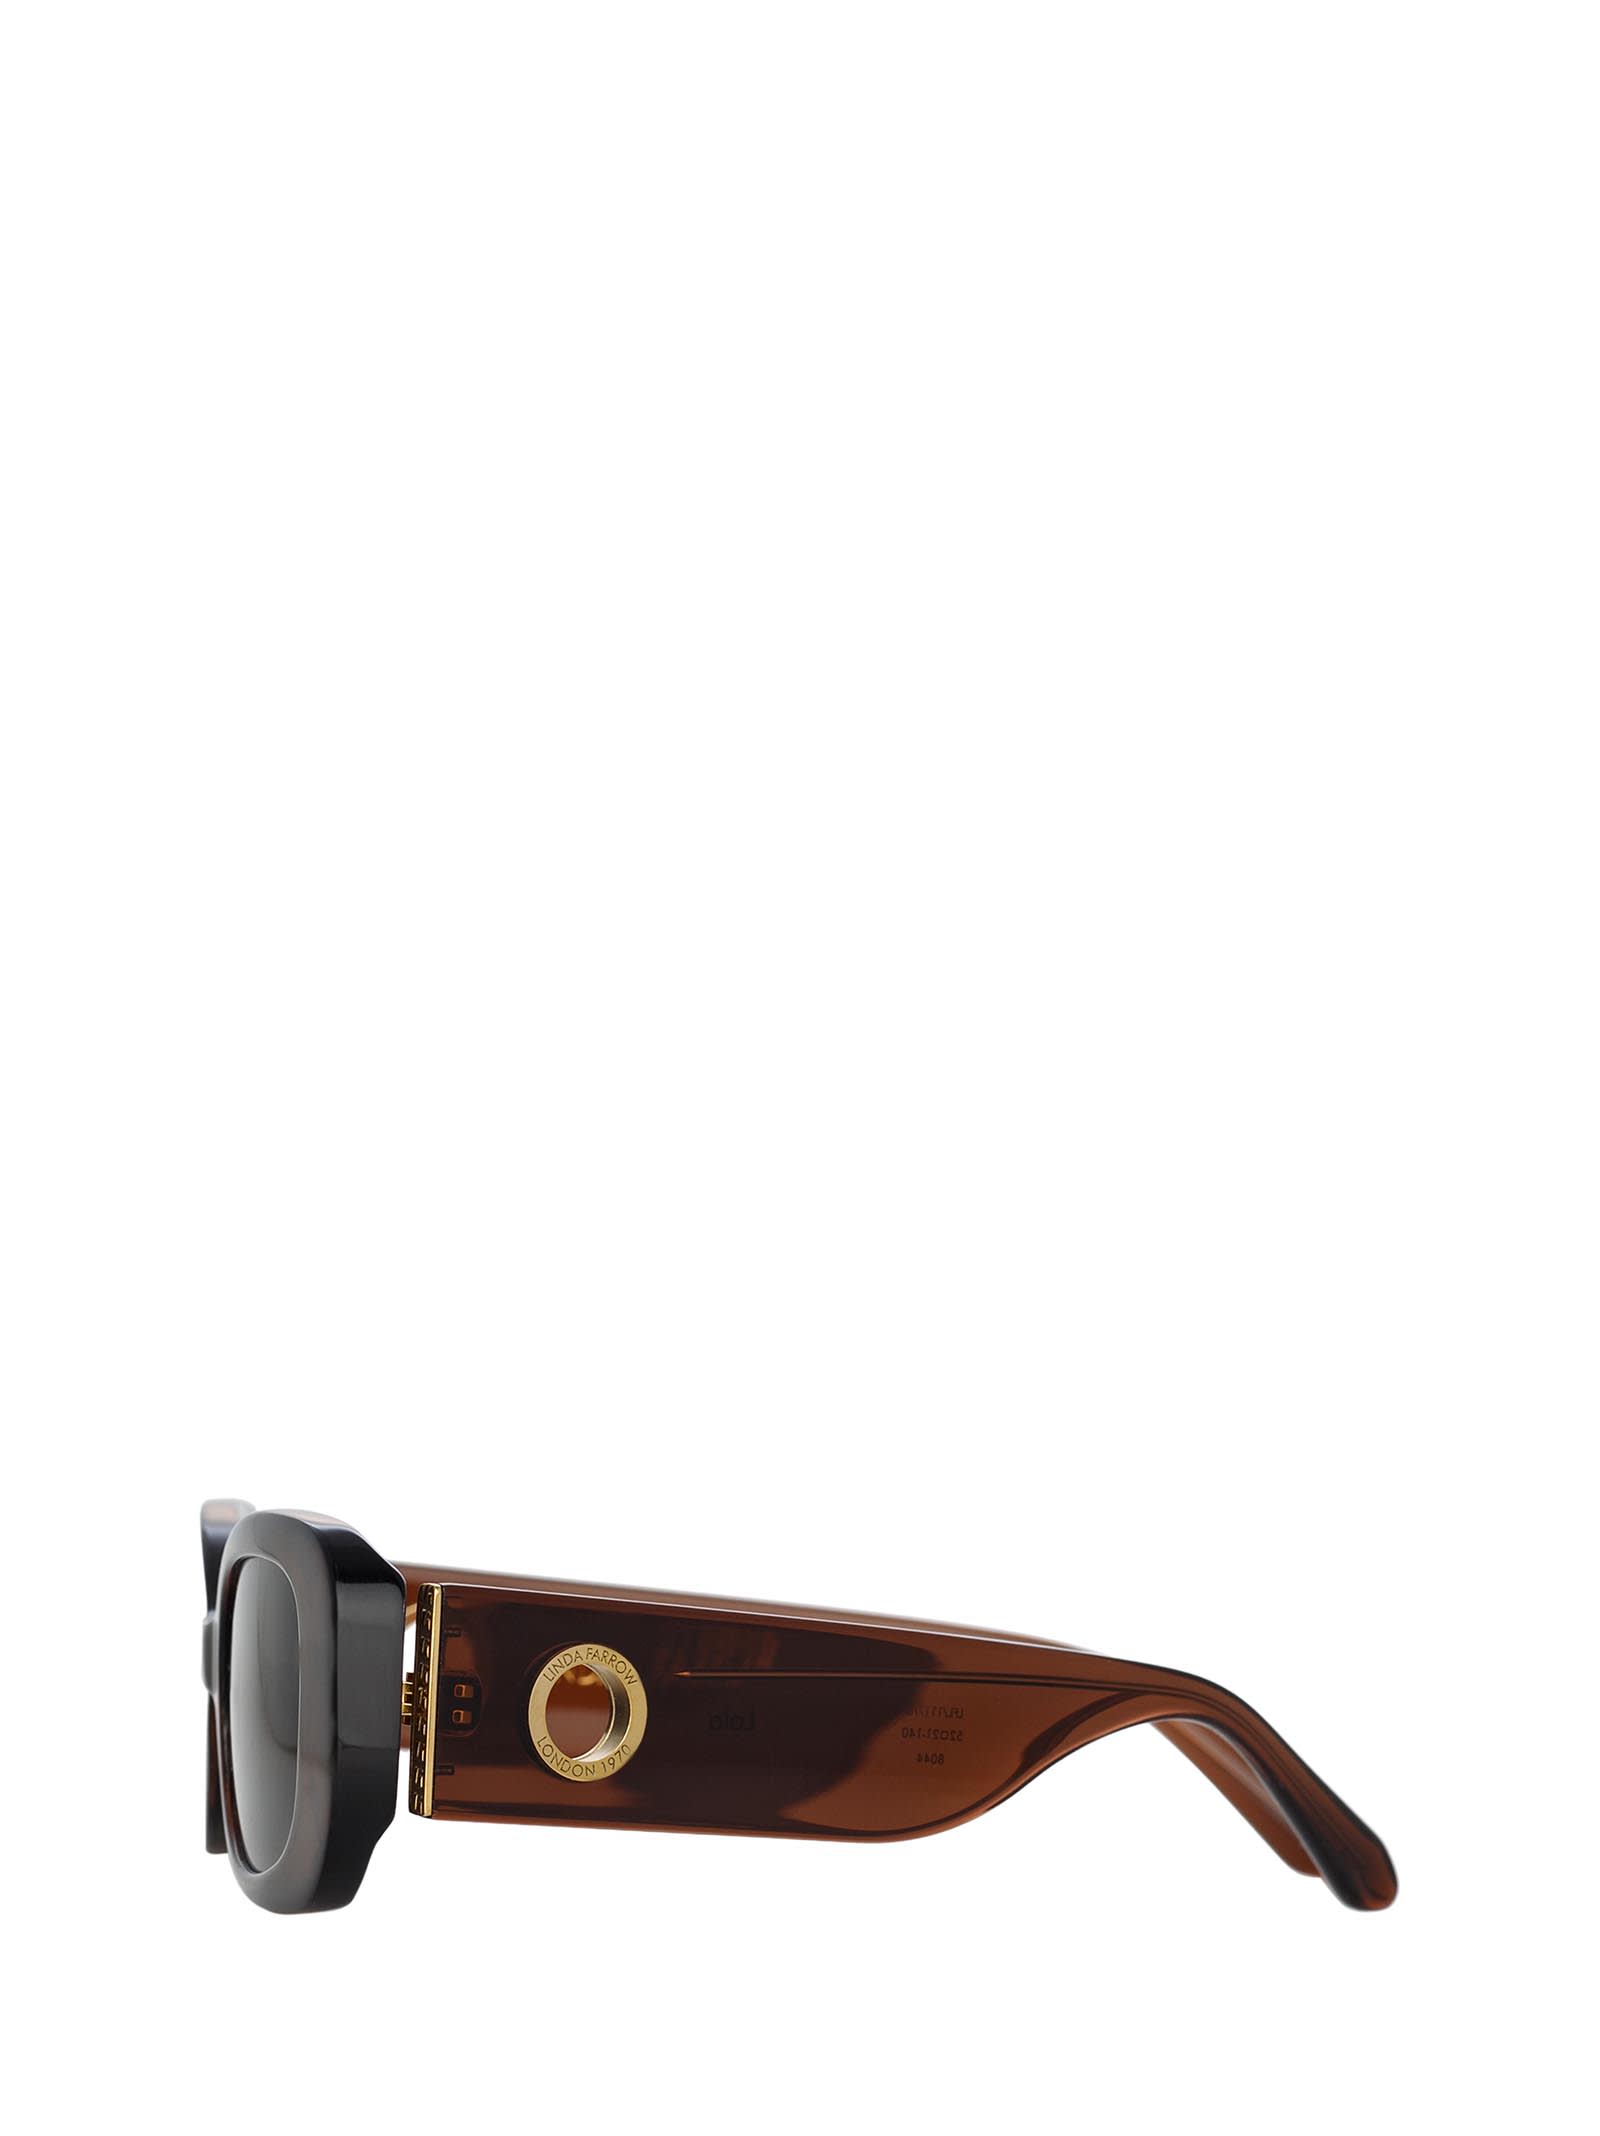 Shop Linda Farrow Lfl1117 Dark Brown / Light Brown Sunglasses